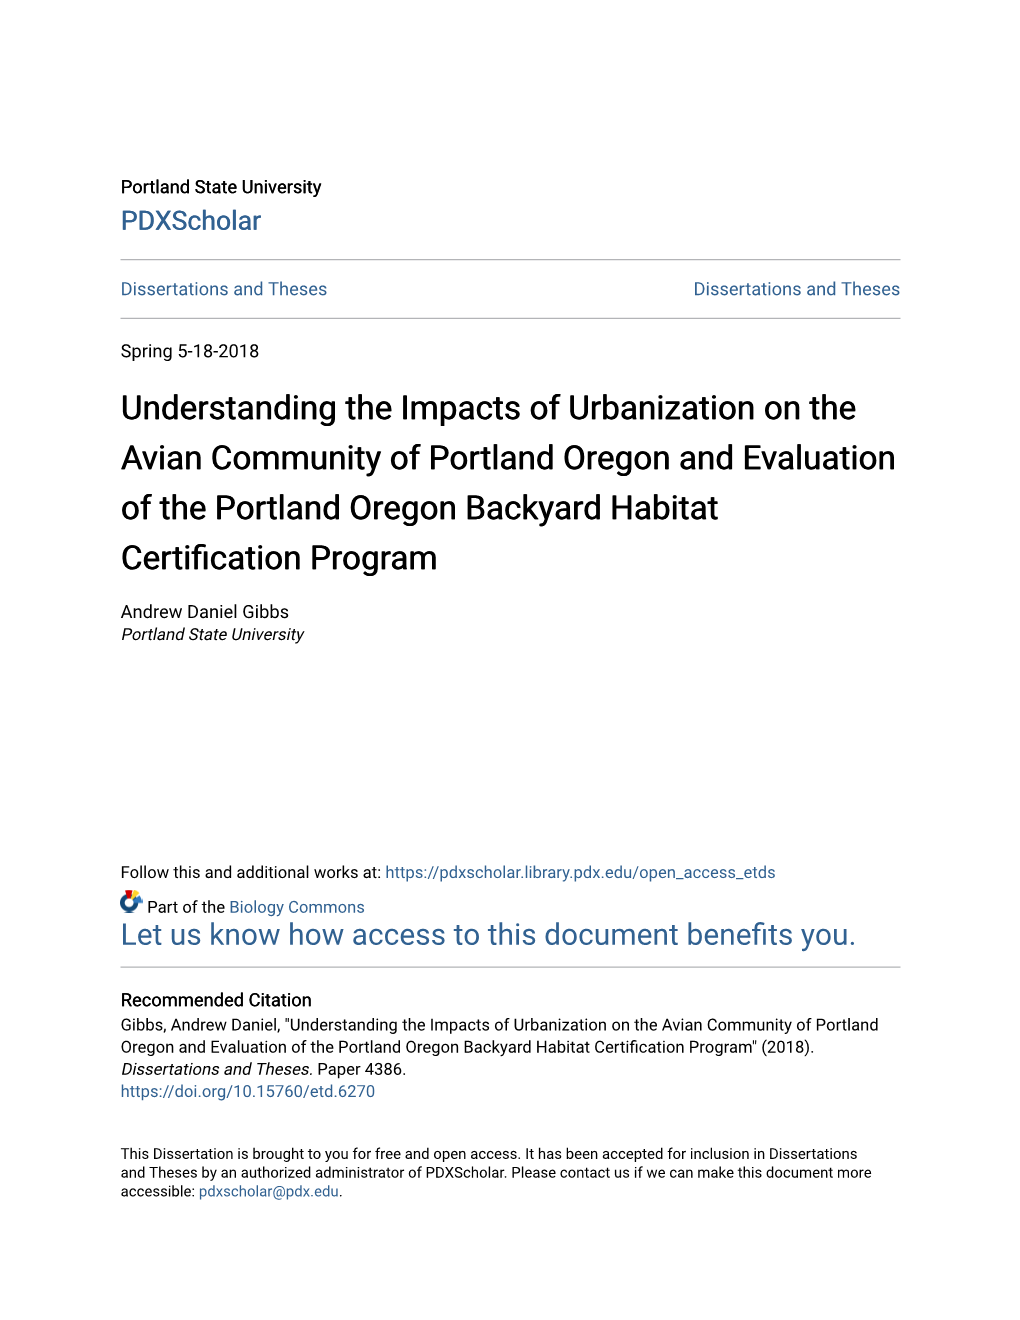 Understanding the Impacts of Urbanization on the Avian Community of Portland Oregon and Evaluation of the Portland Oregon Backyard Habitat Certification Program